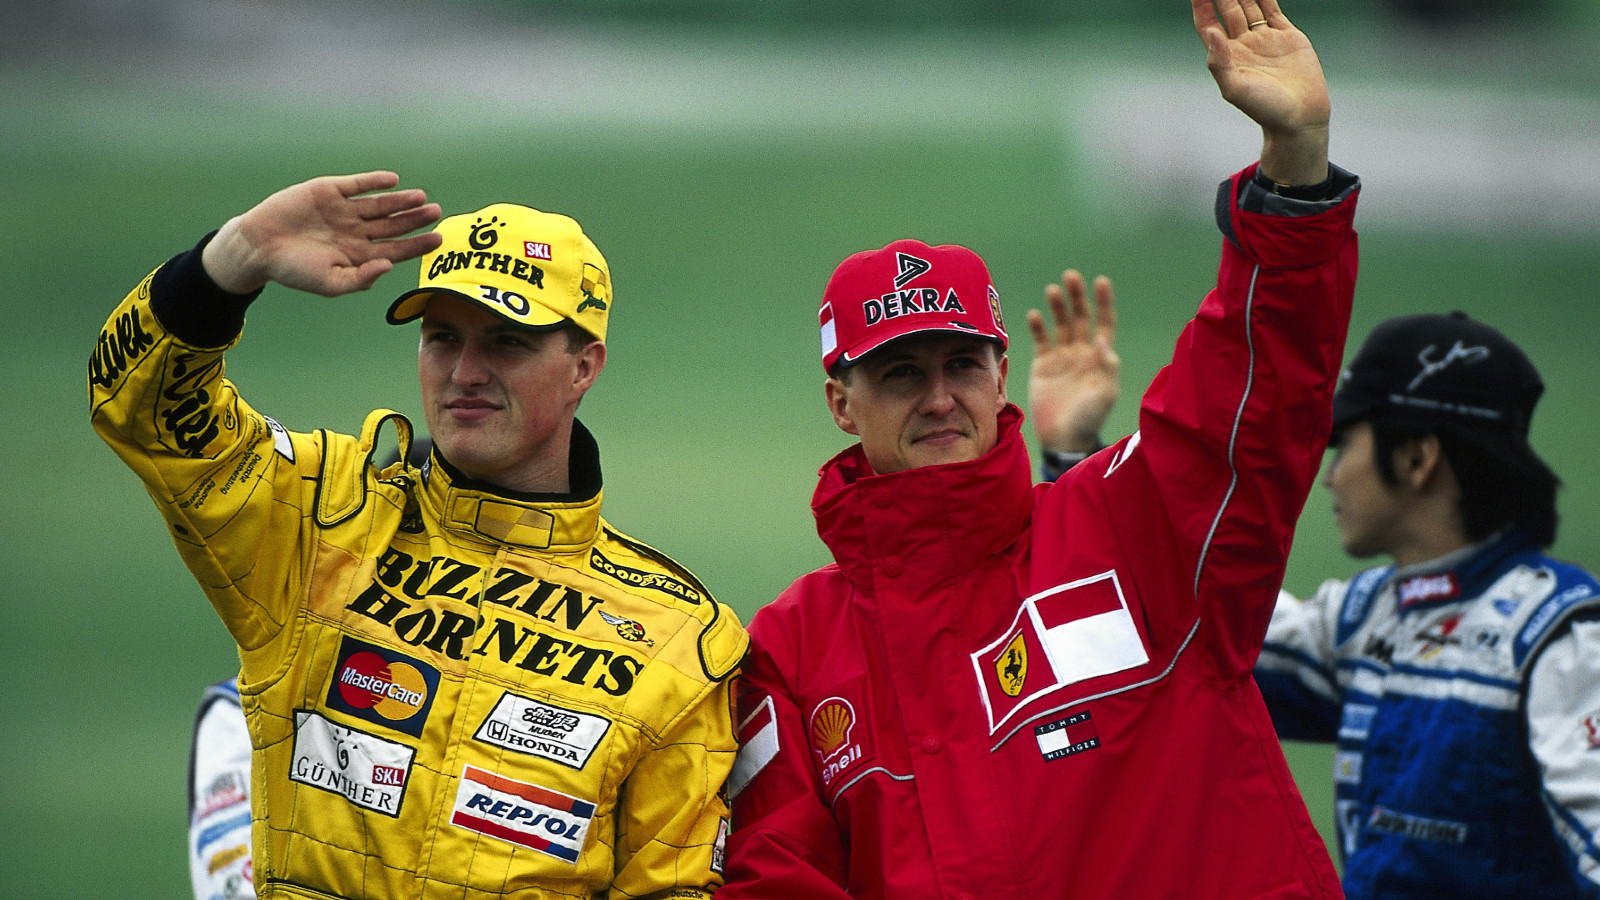 Jordan's Ralf Schumacher and Ferrari's Michael Schumacher in 1998.